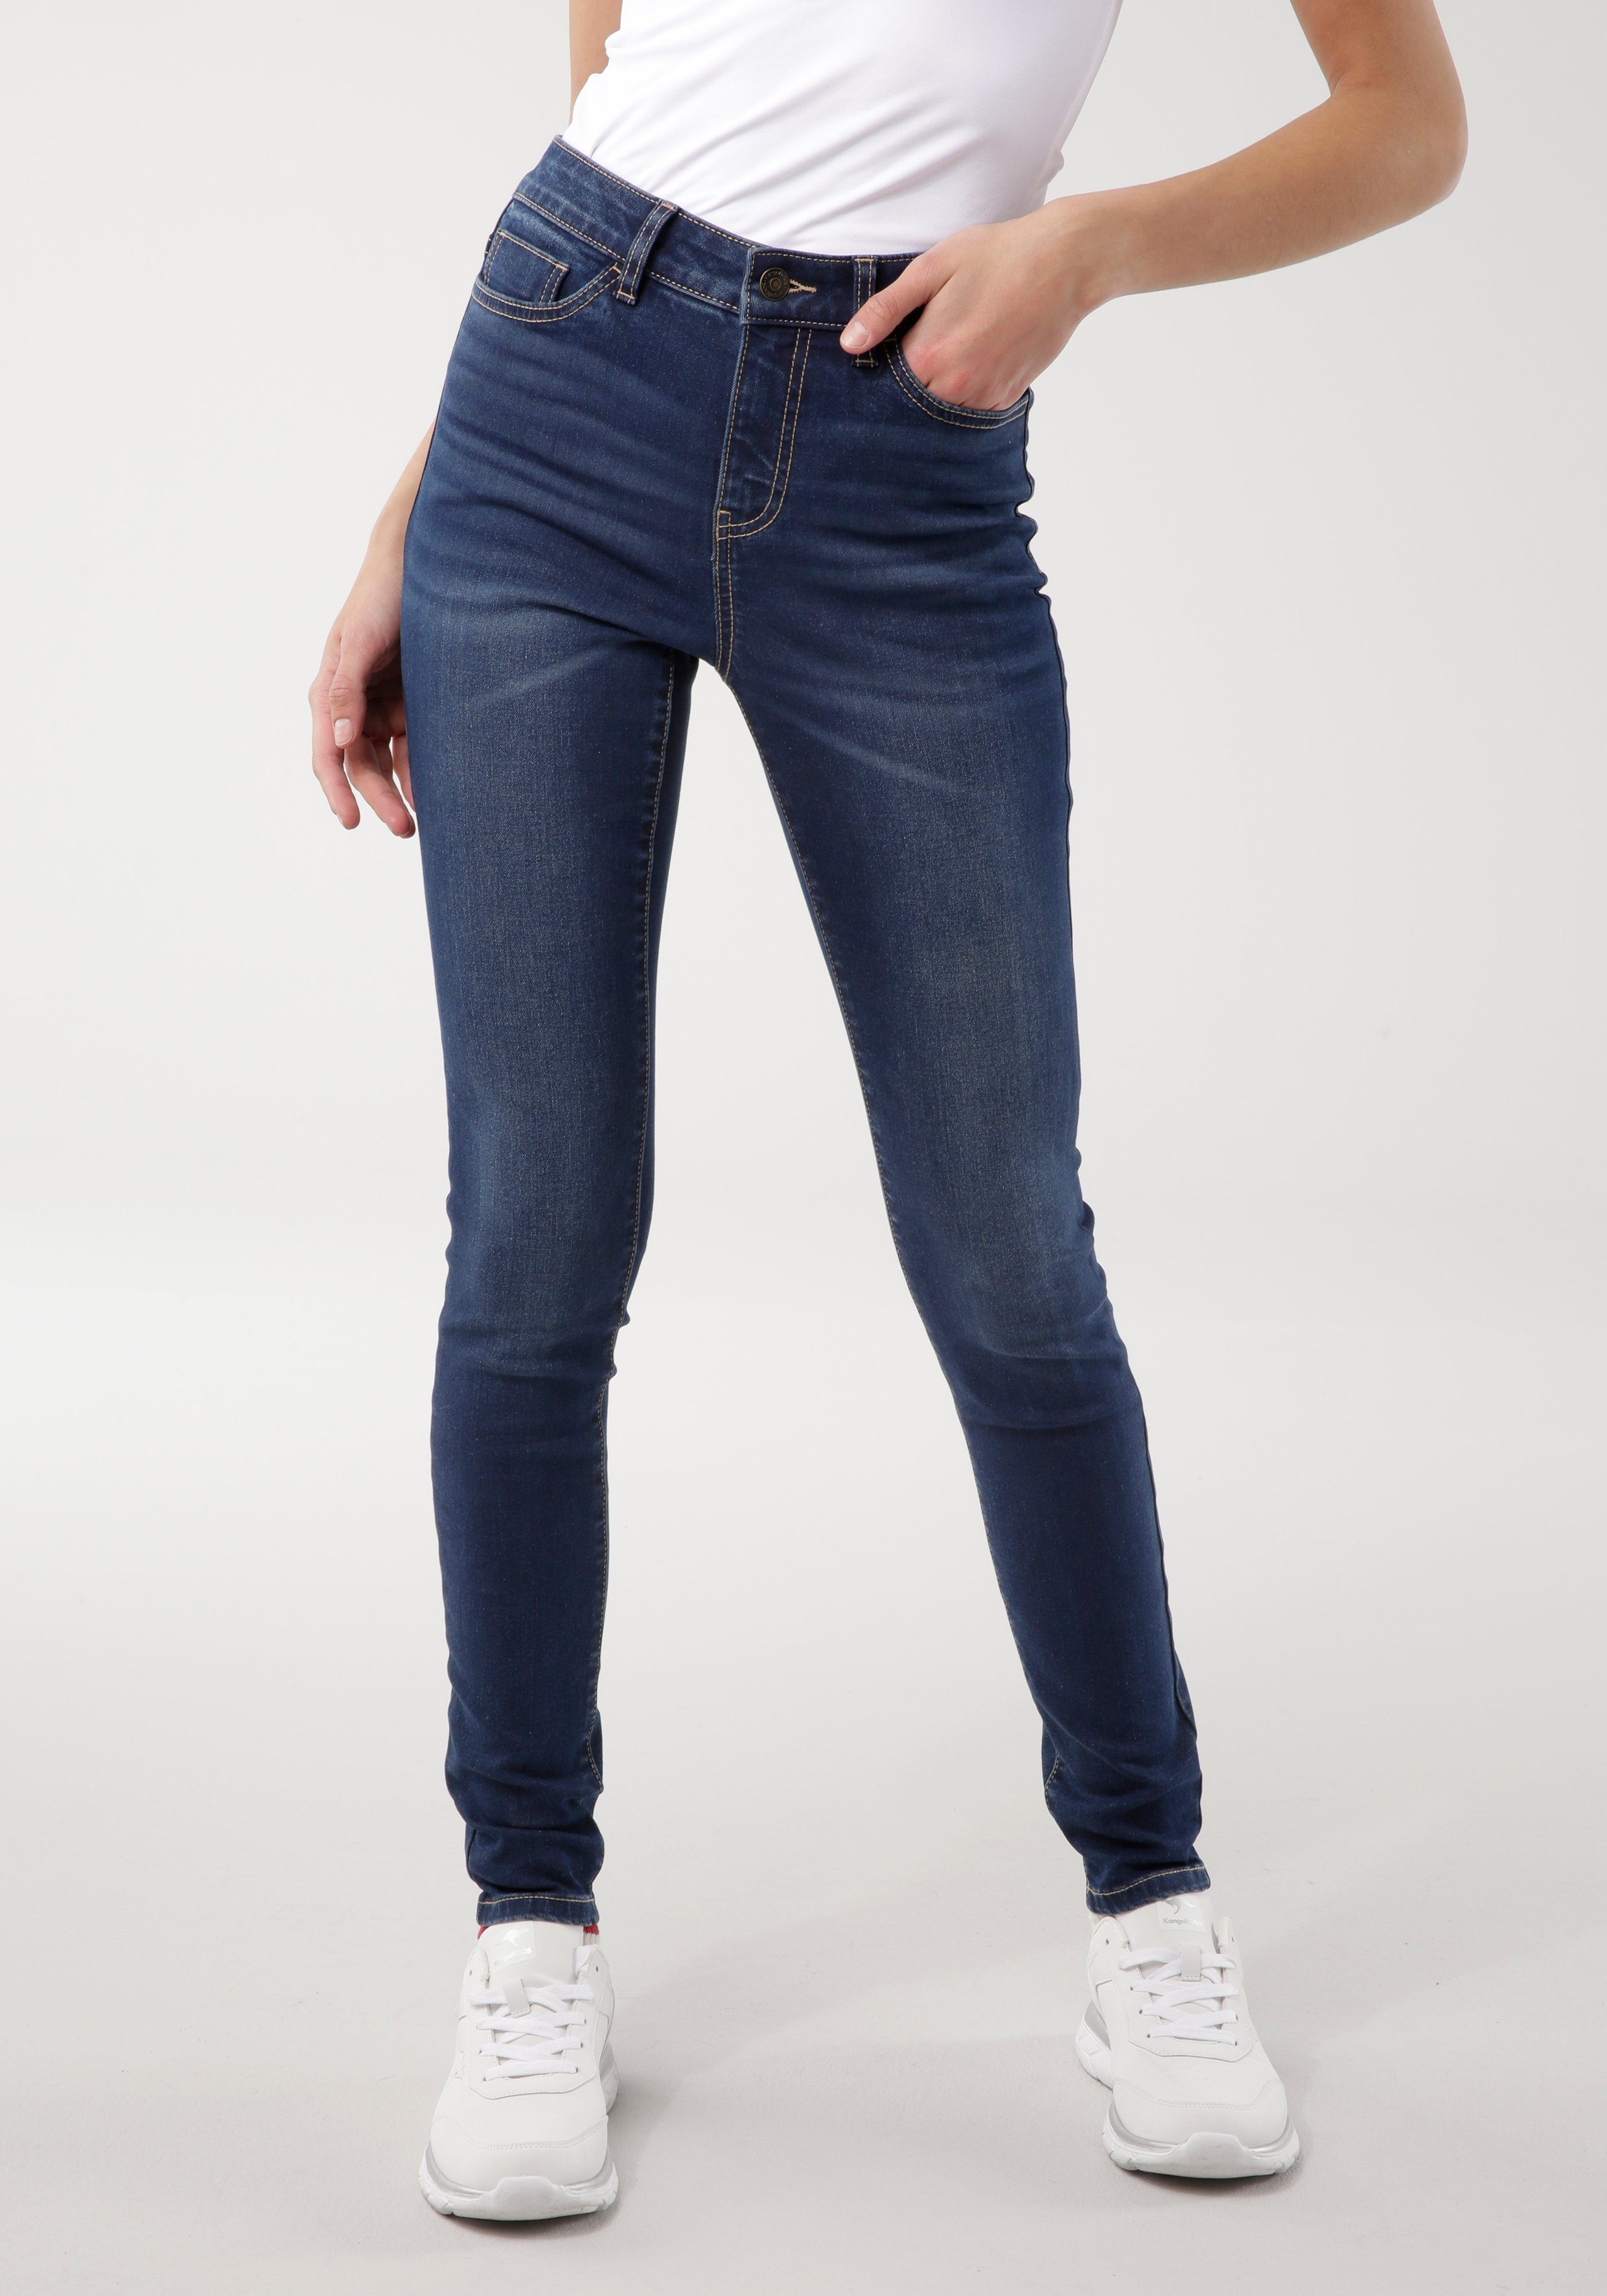 [Super schön] KangaROOS 5-Pocket-Jeans SUPER SKINNY HIGH used-Effekt RISE darkblue-used mit